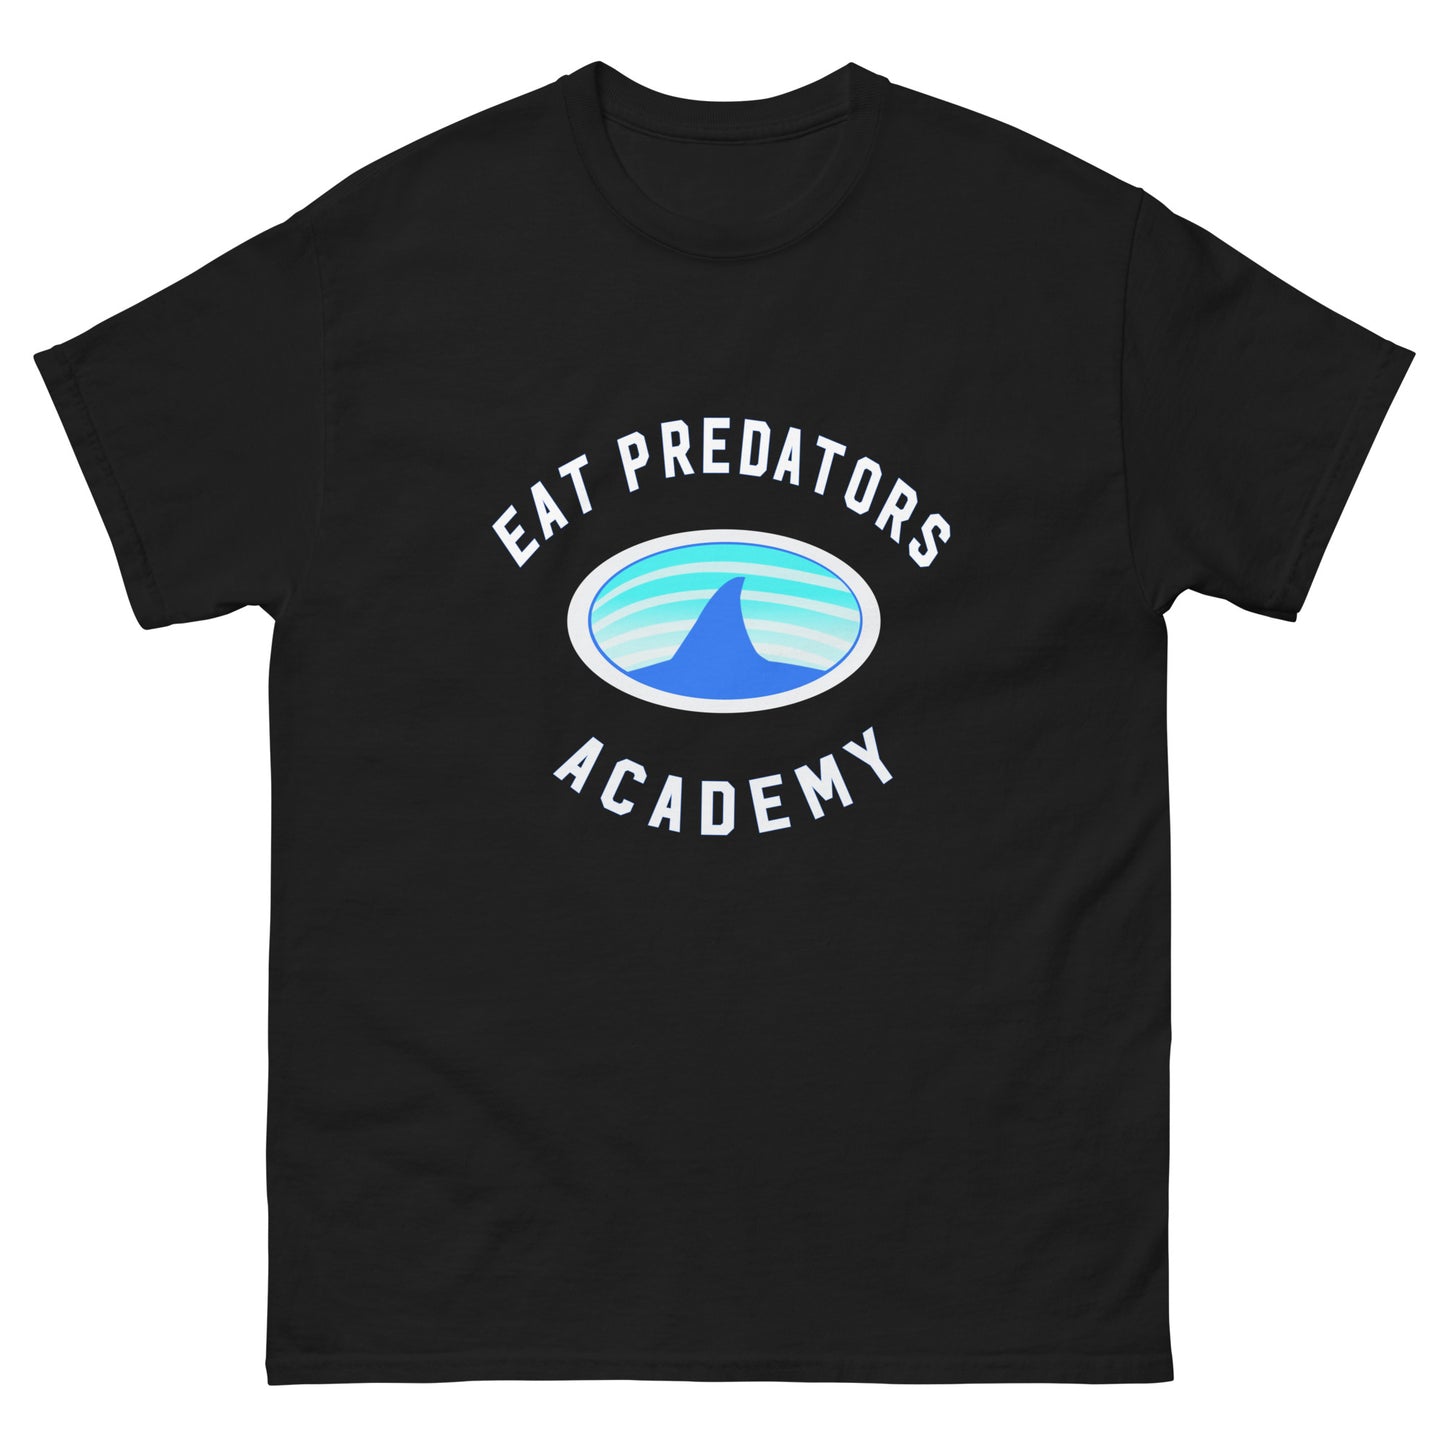 Limited Edition Eat Predators Academy T-Shirt